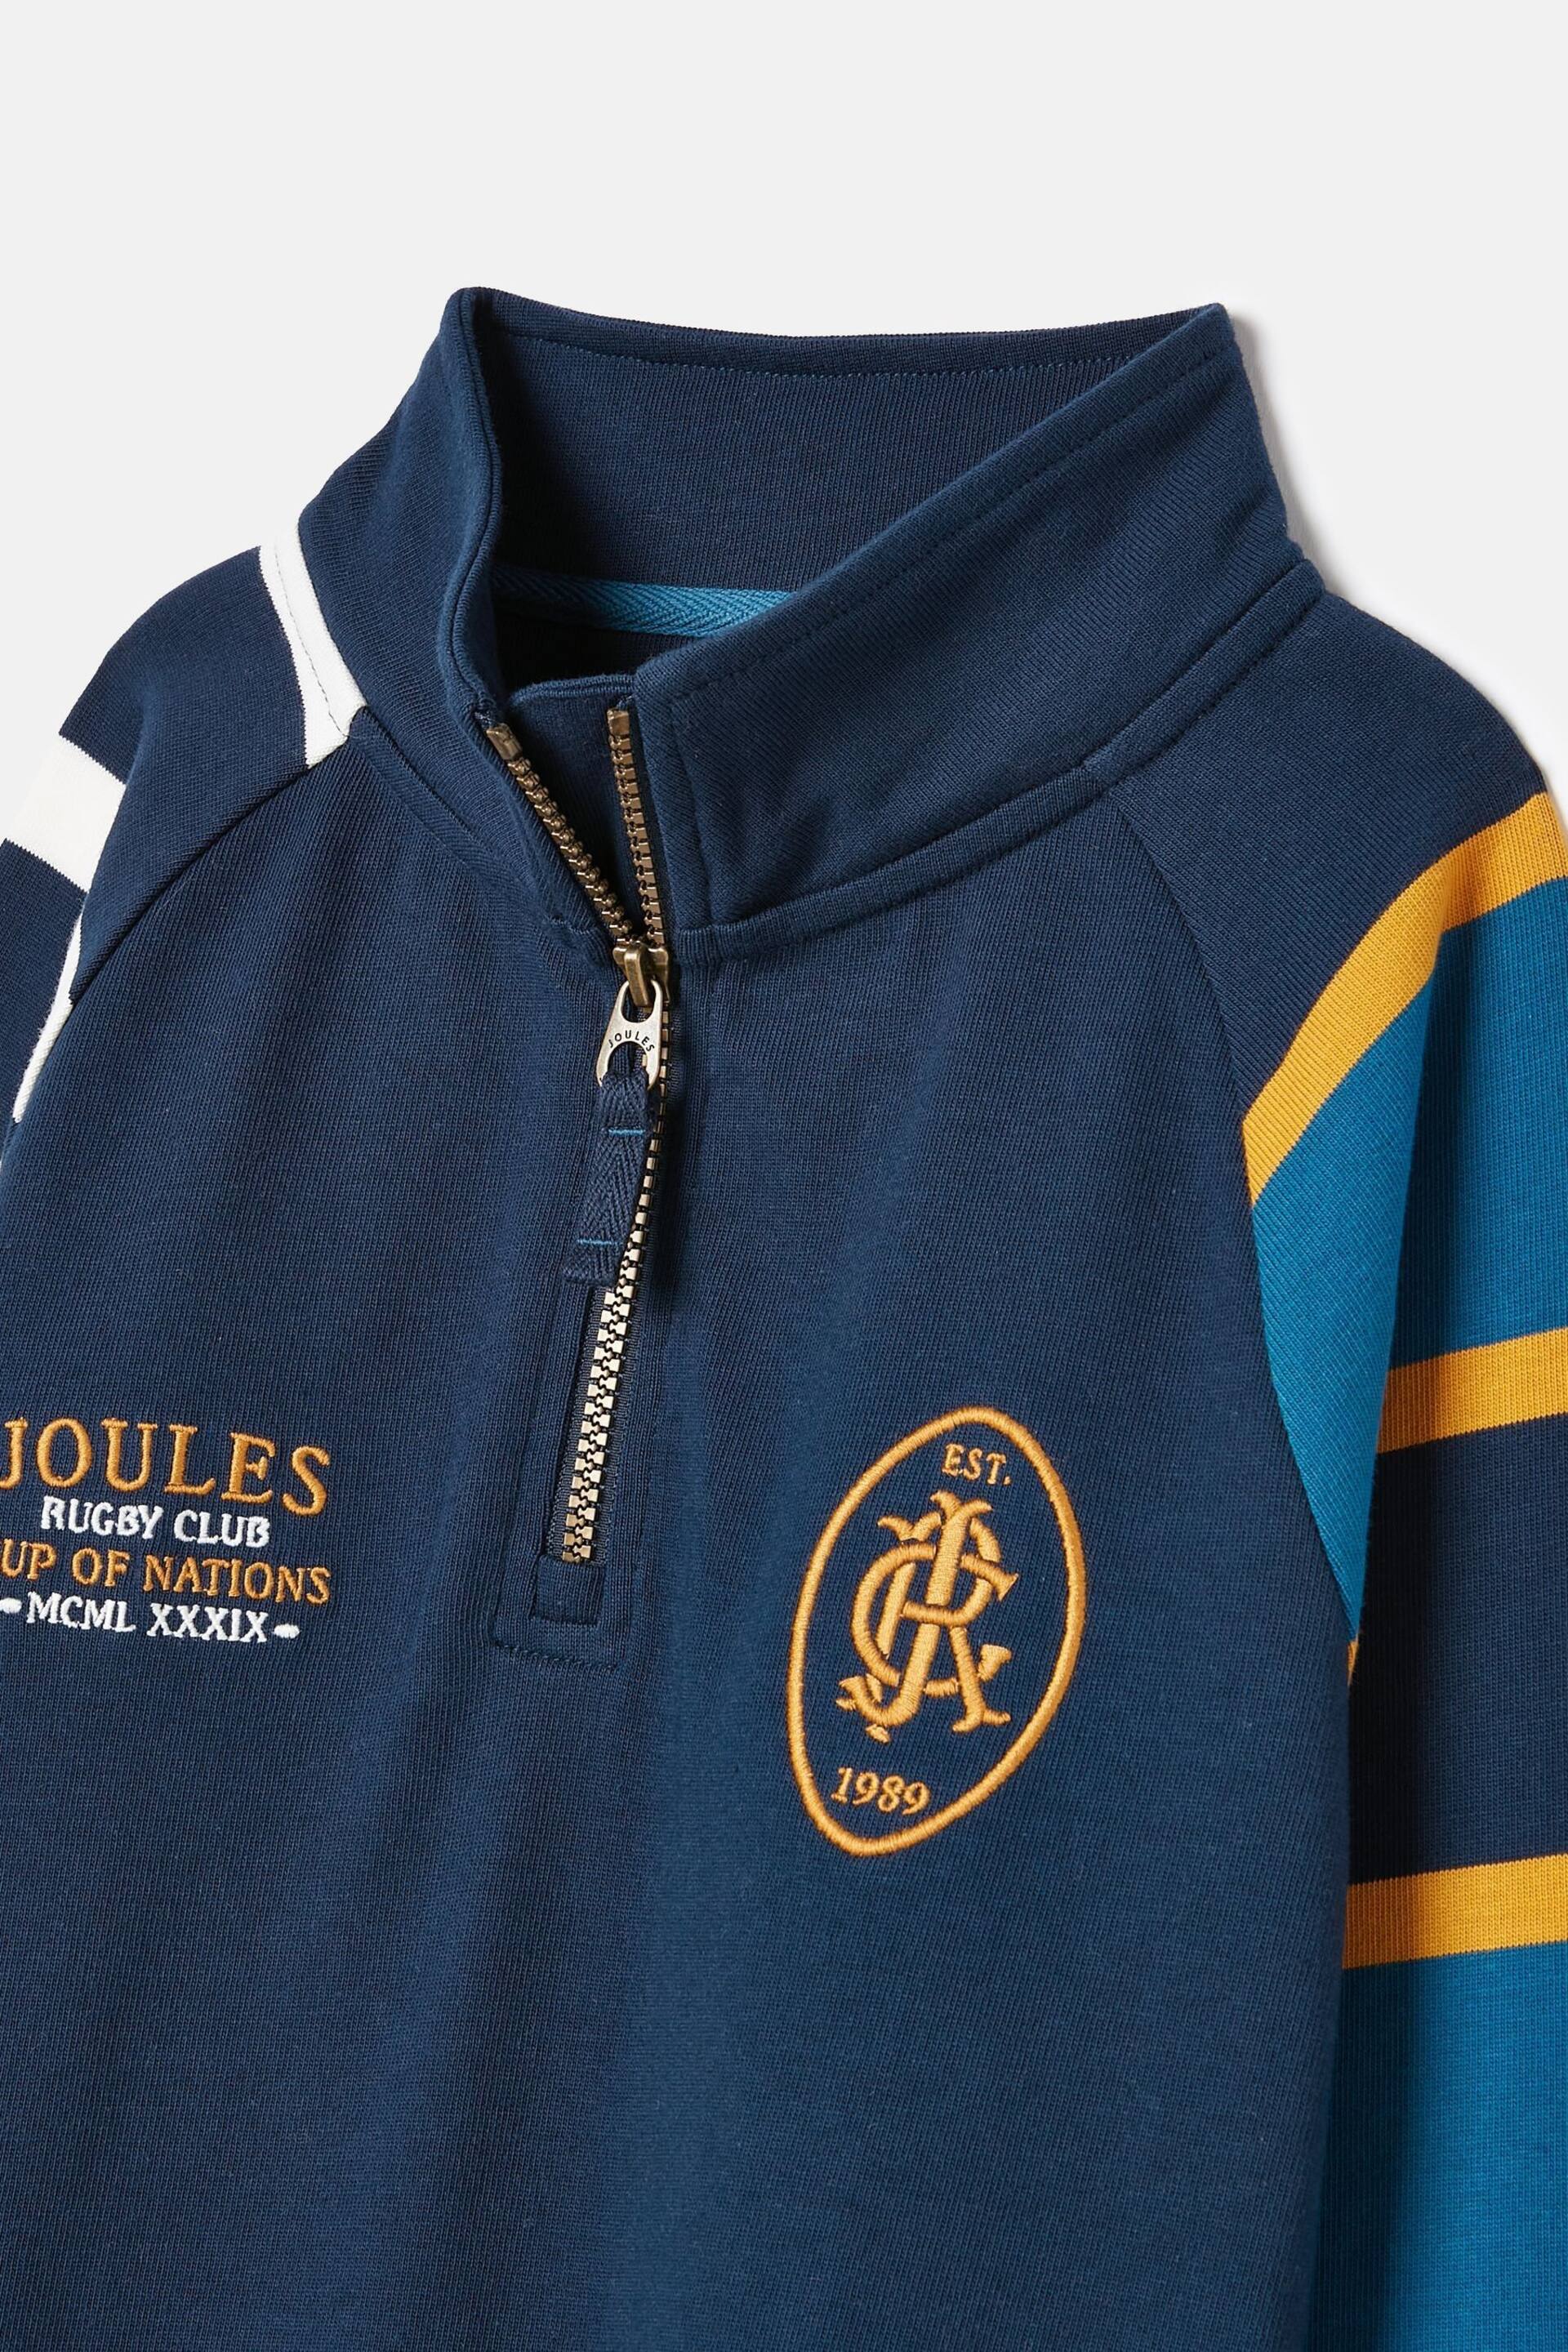 Joules Ellis Navy Quarter Zip Rugby Sweatshirt - Image 9 of 13